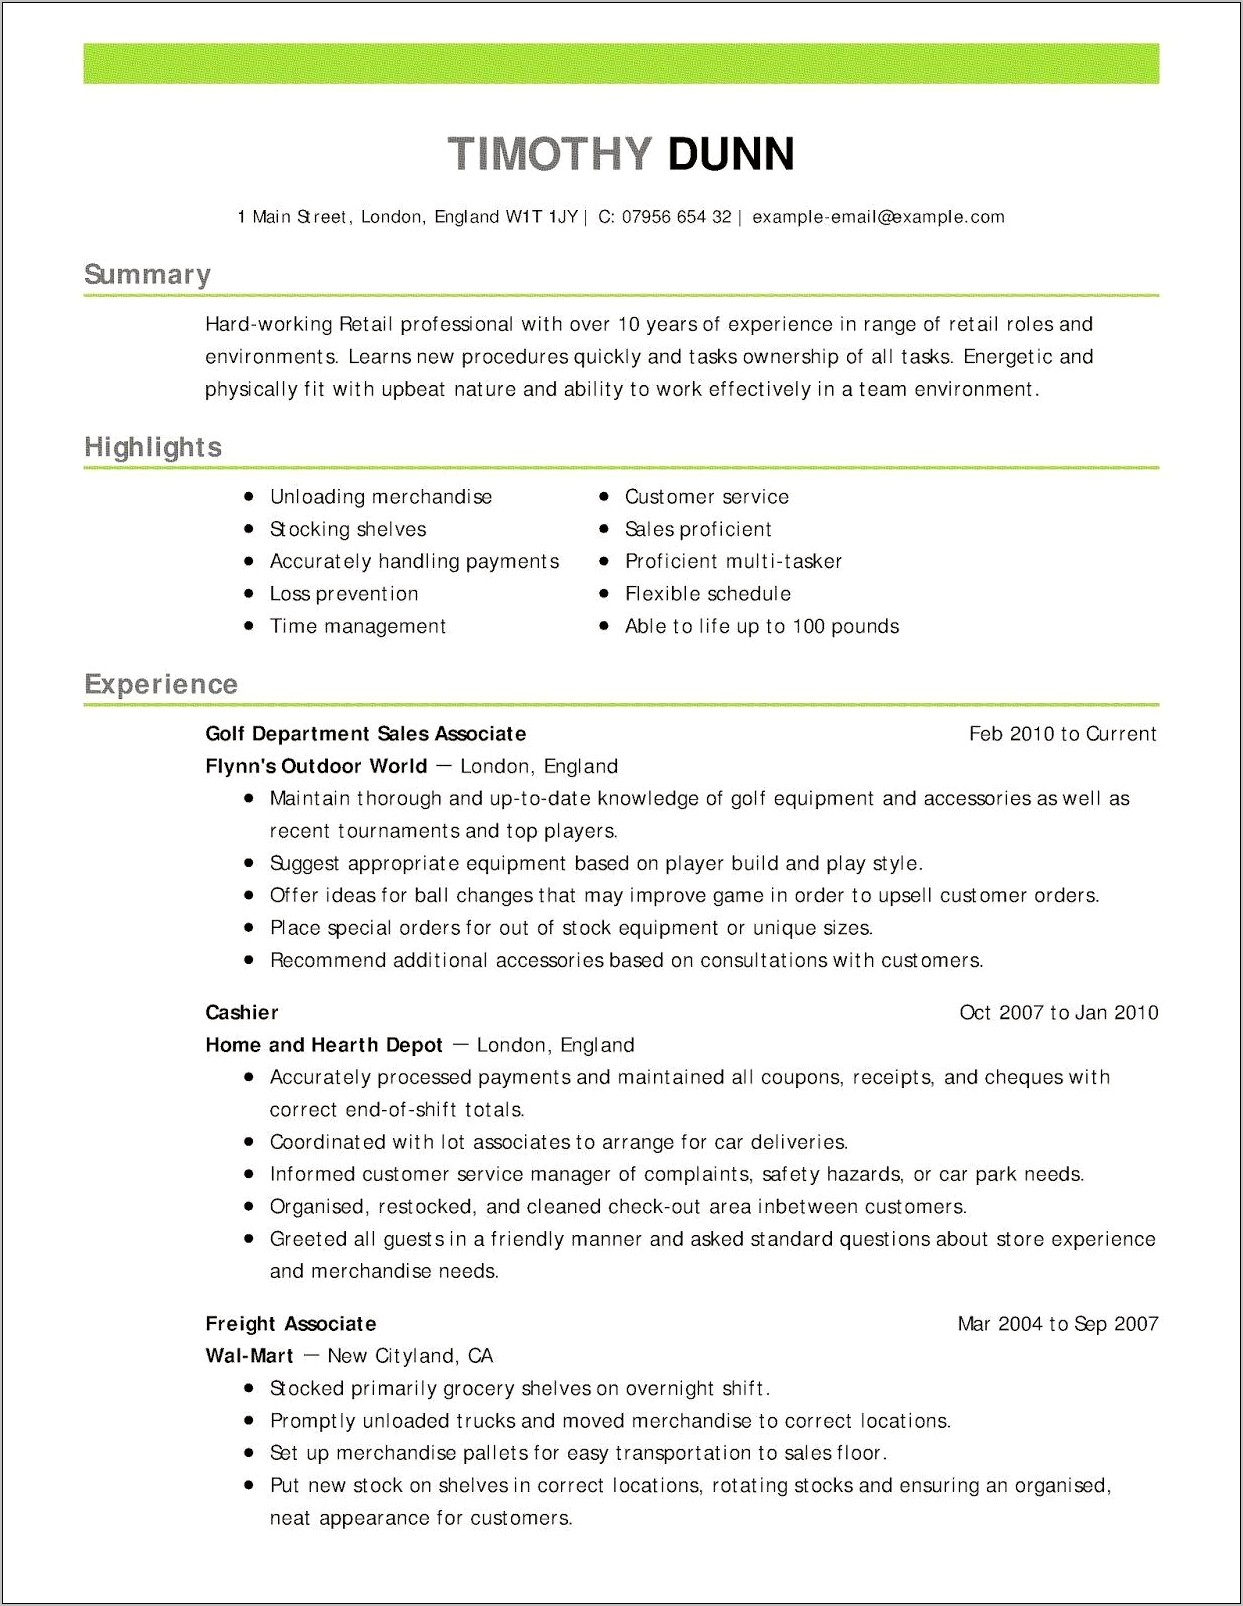 Restaurant Manager Job Description On Resume